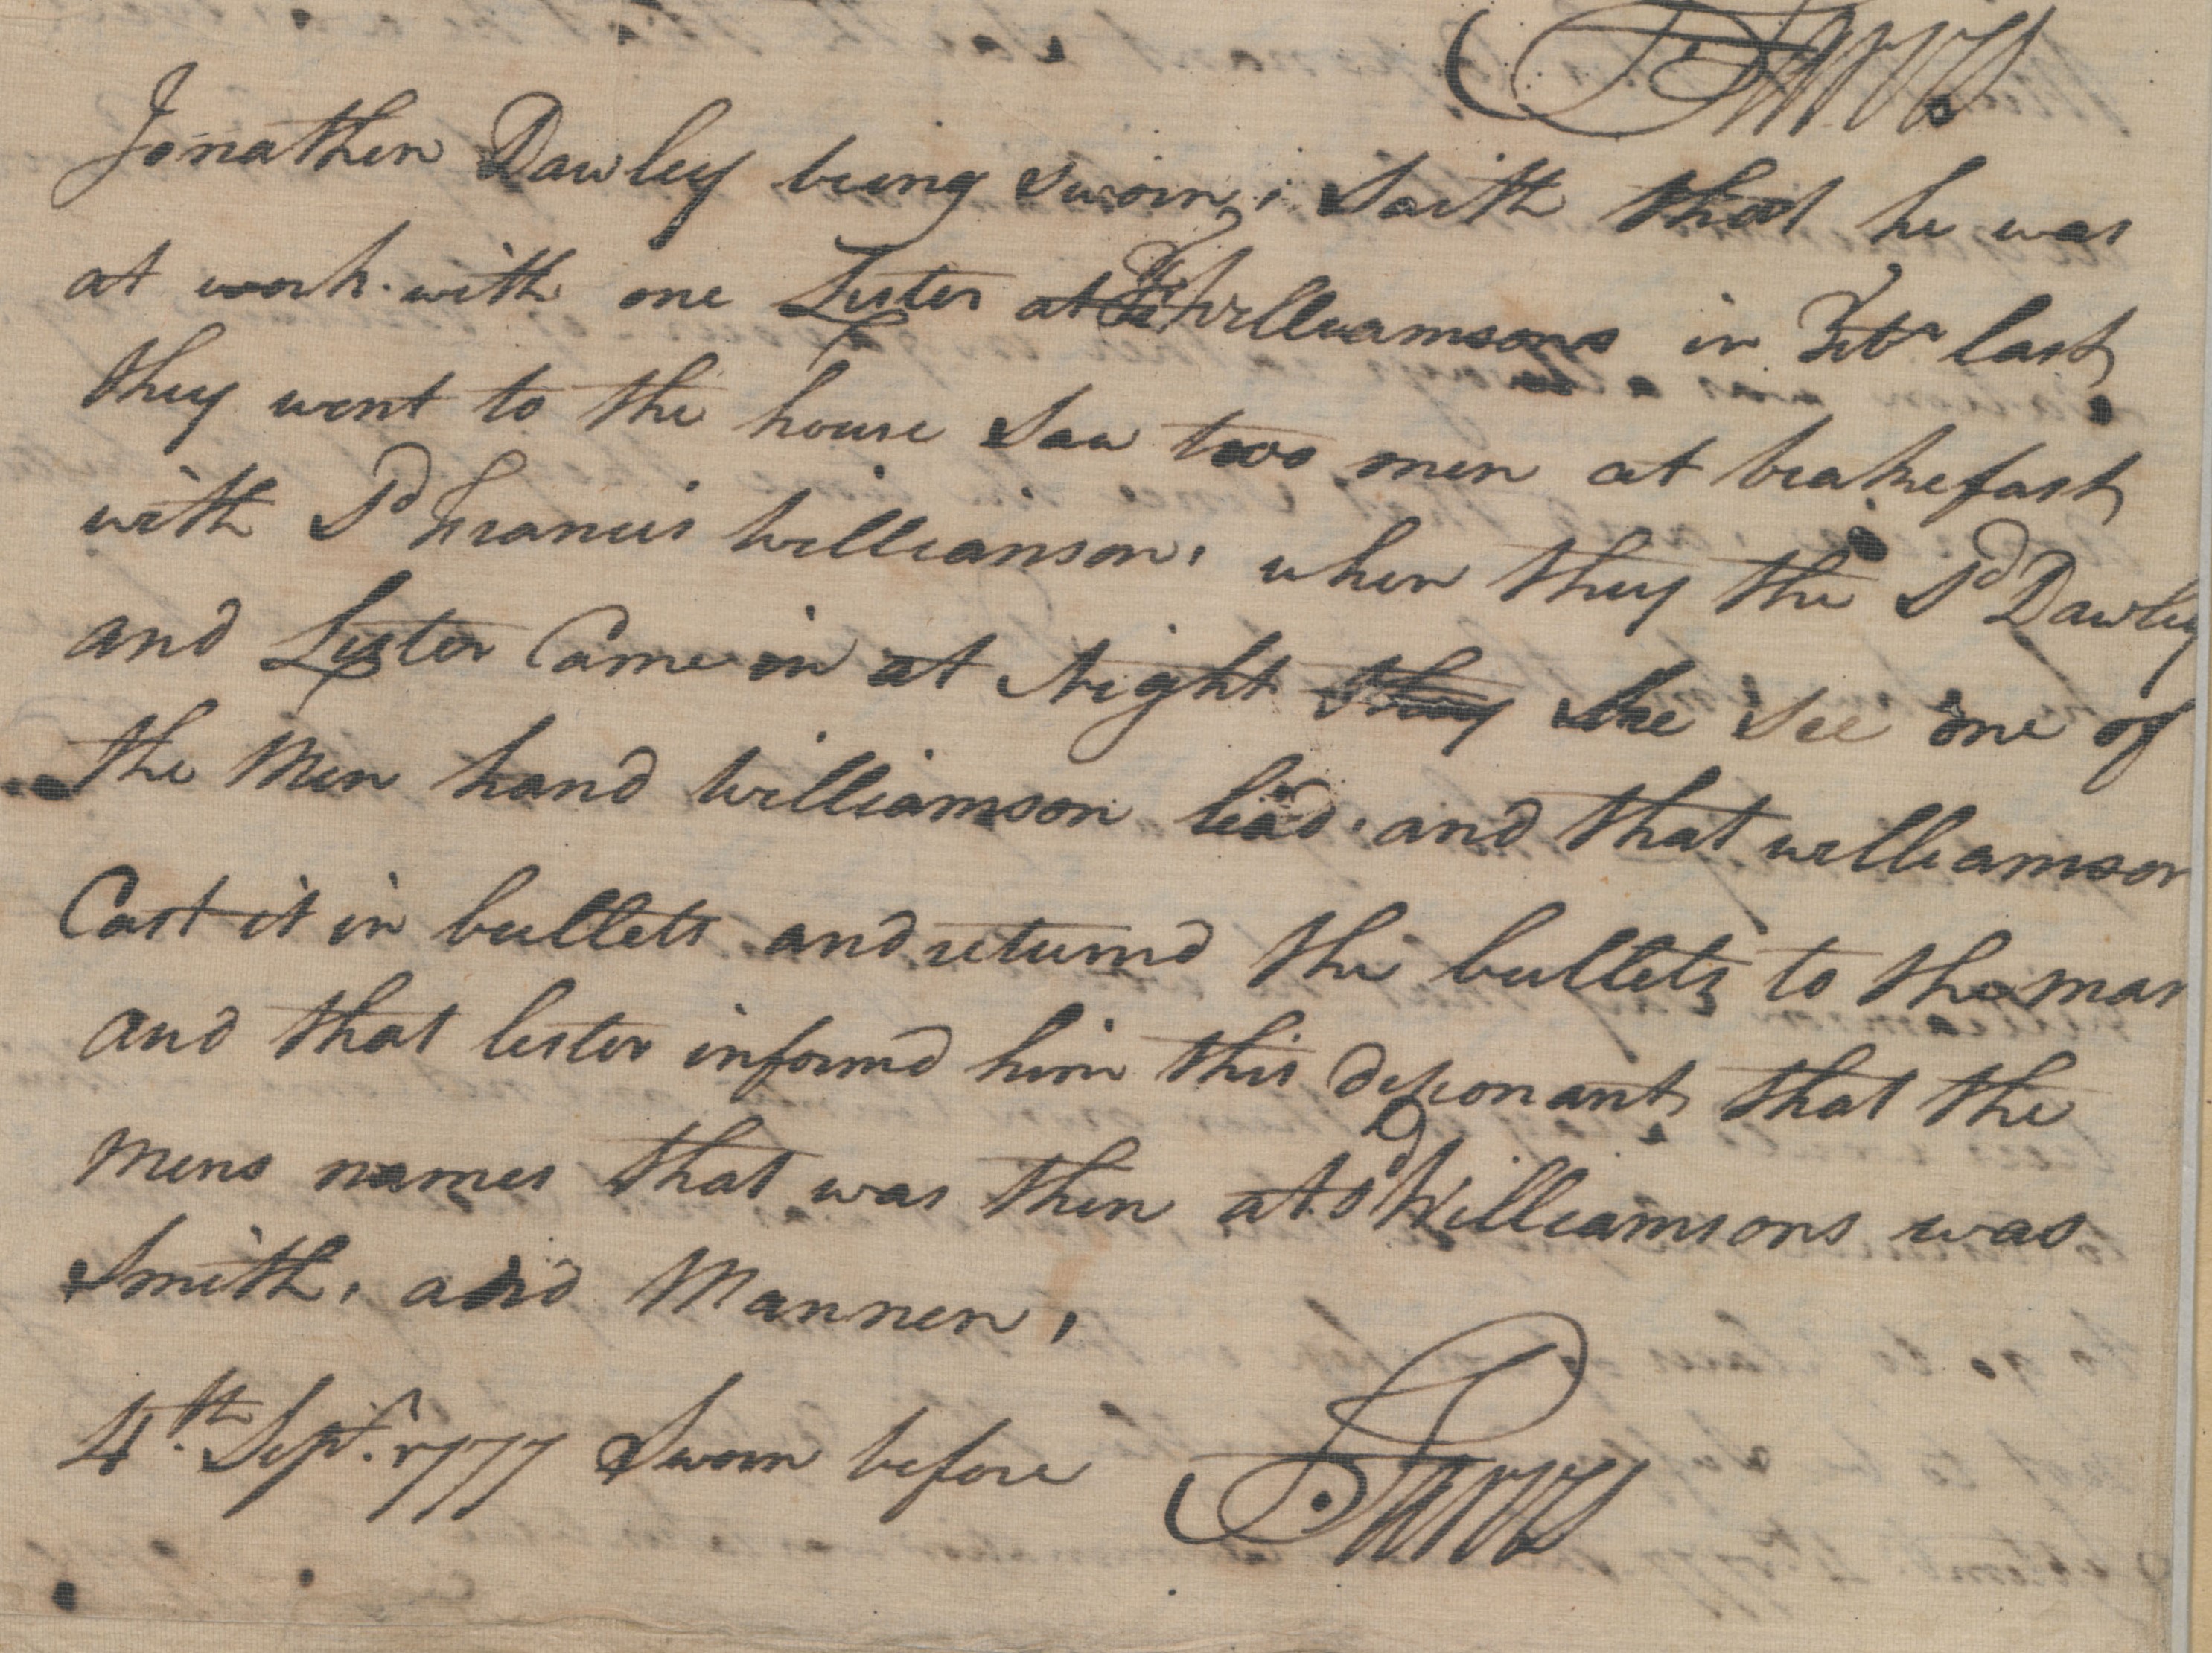 Deposition of Jonathan Dawley, 4 September 1777